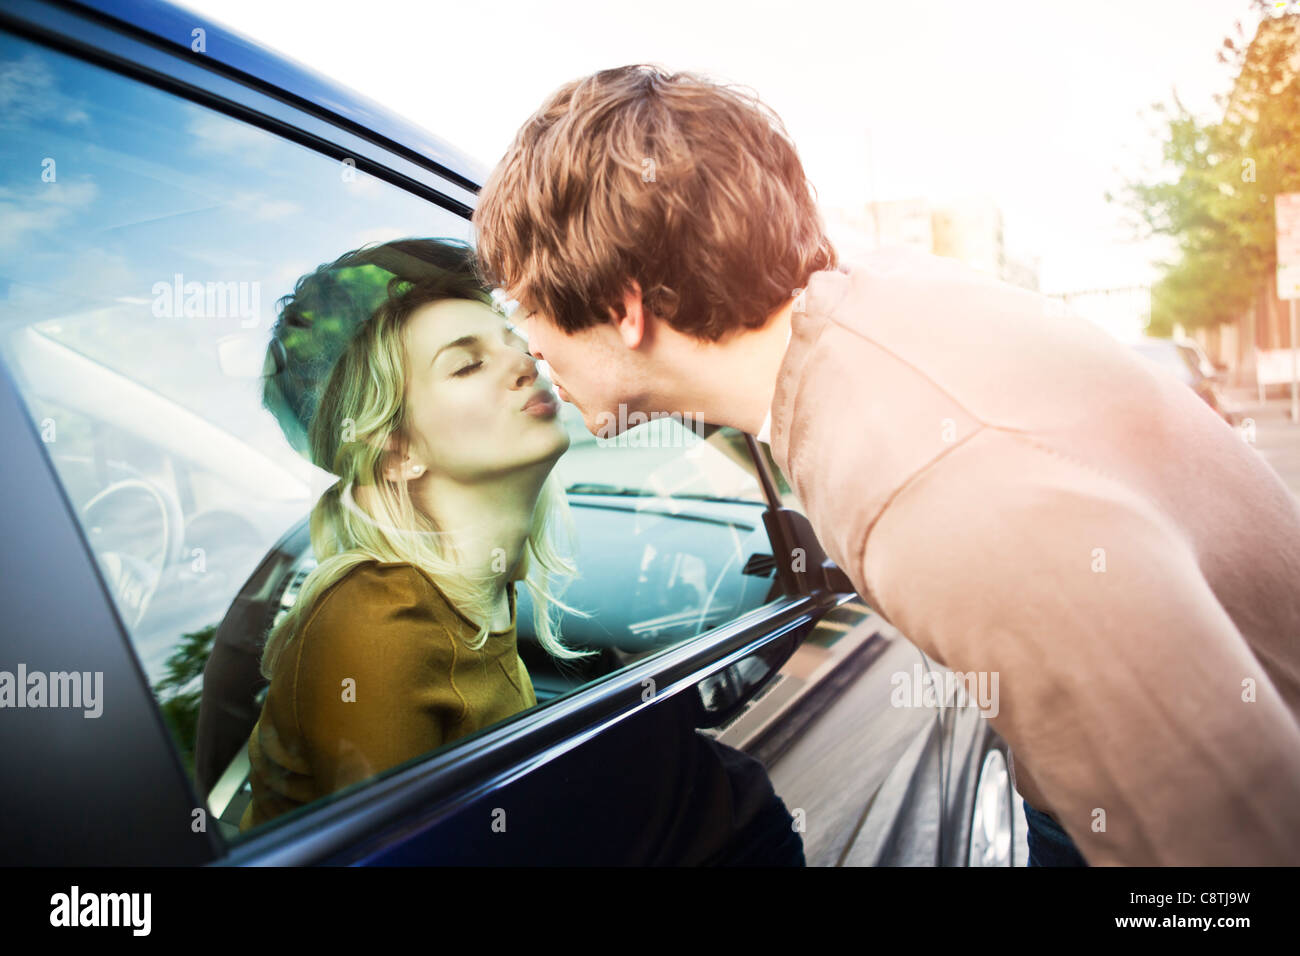 USA, Washington, Seattle, Young couple kissing through window of car Stock Photo